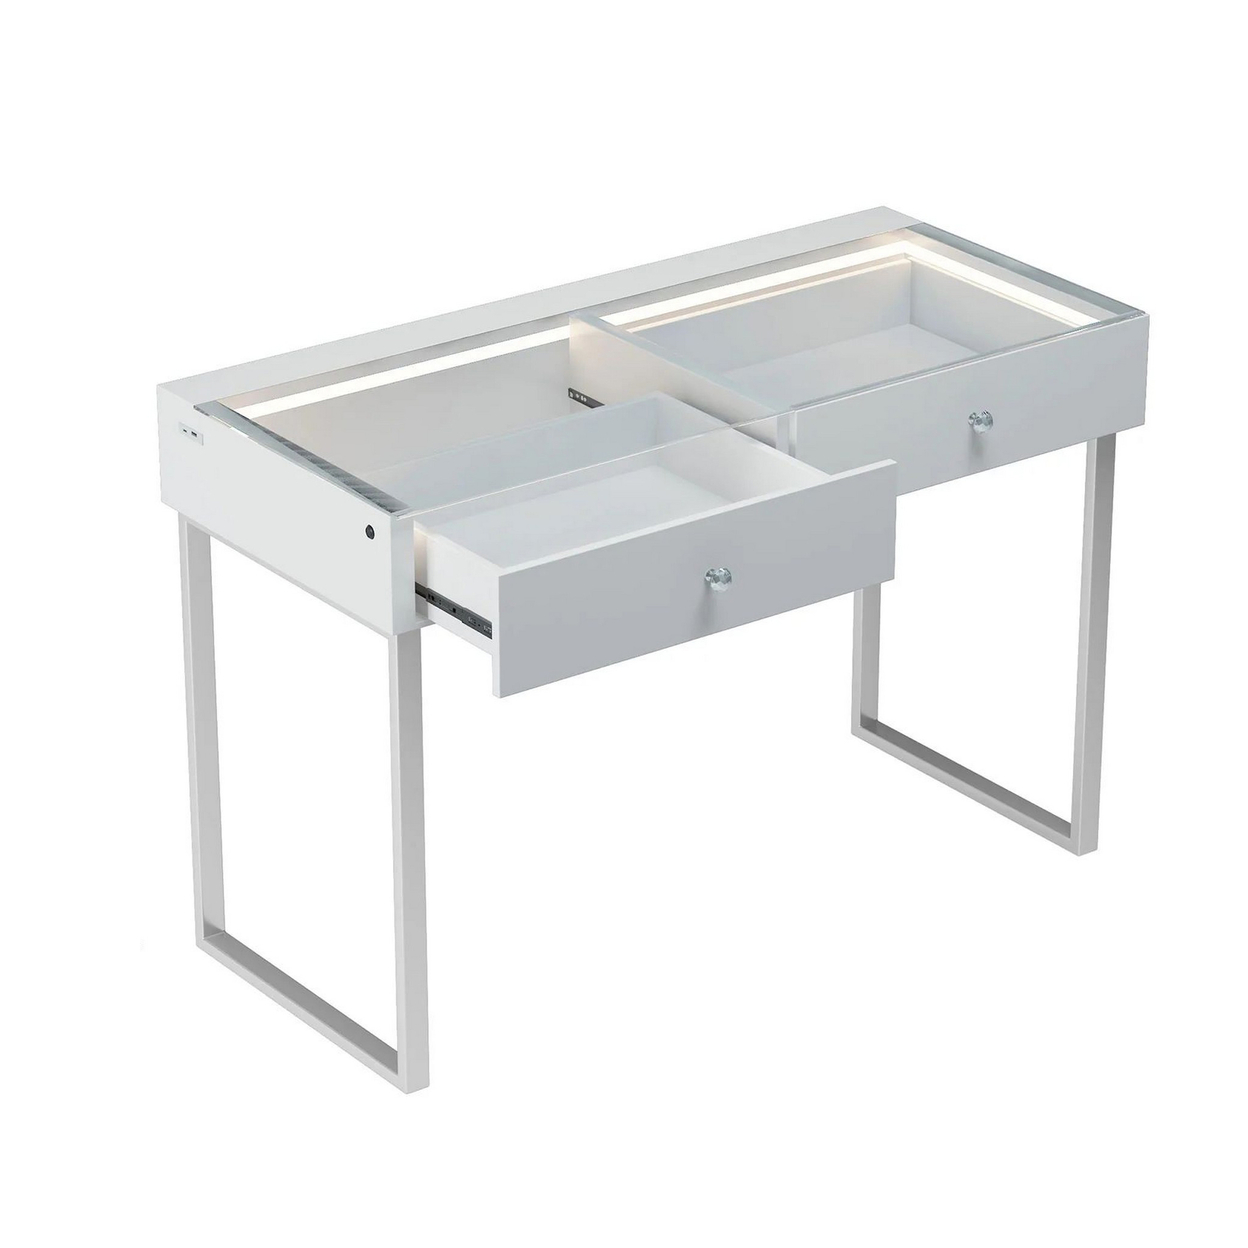 Yli 39 Inch Vanity Desk, 2 Drawers, USB Charge Port, Glass Tabletop, White - Saltoro Sherpi